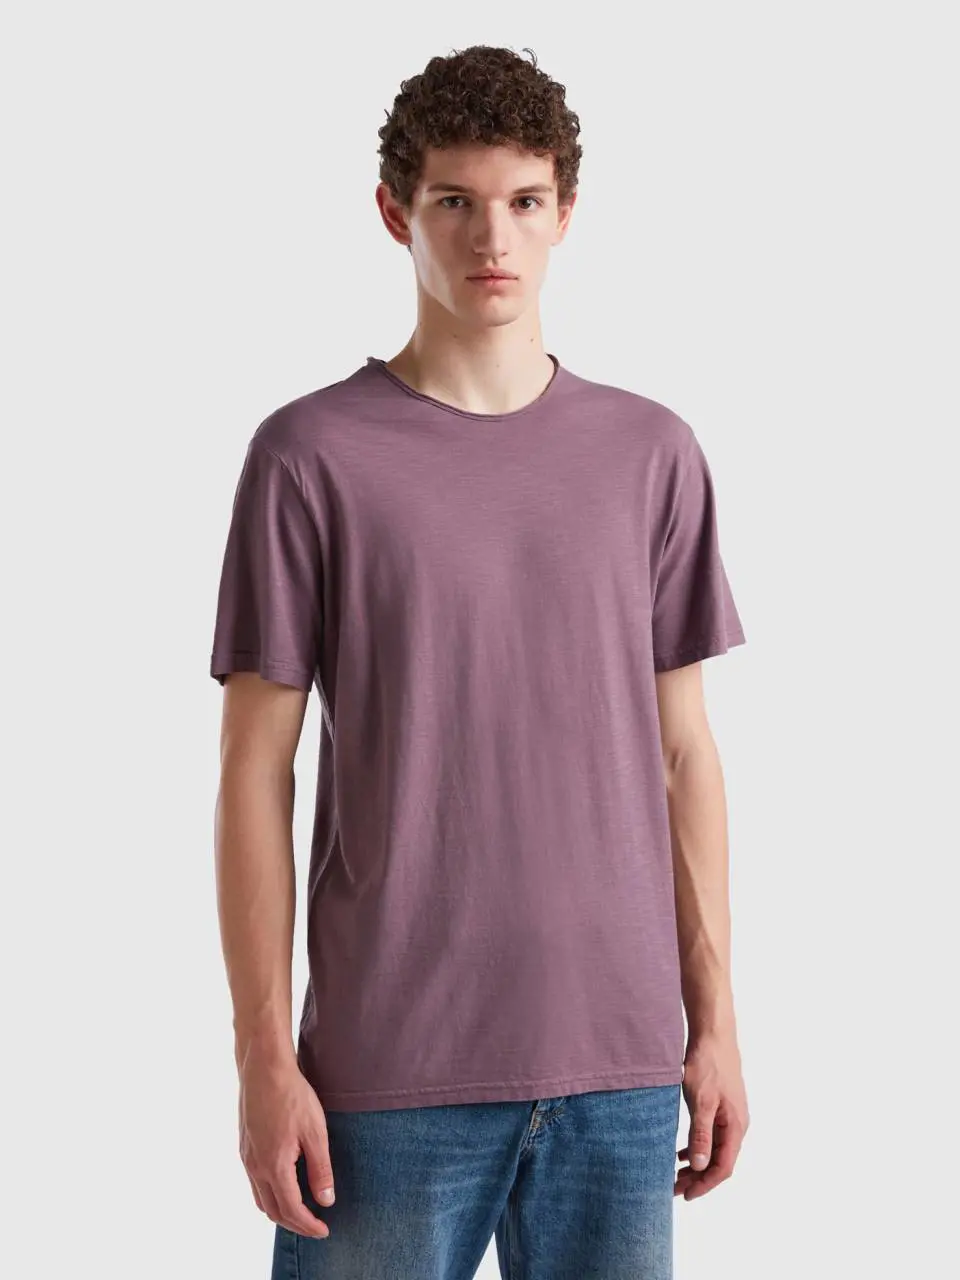 Benetton purple t-shirt in slub cotton. 1